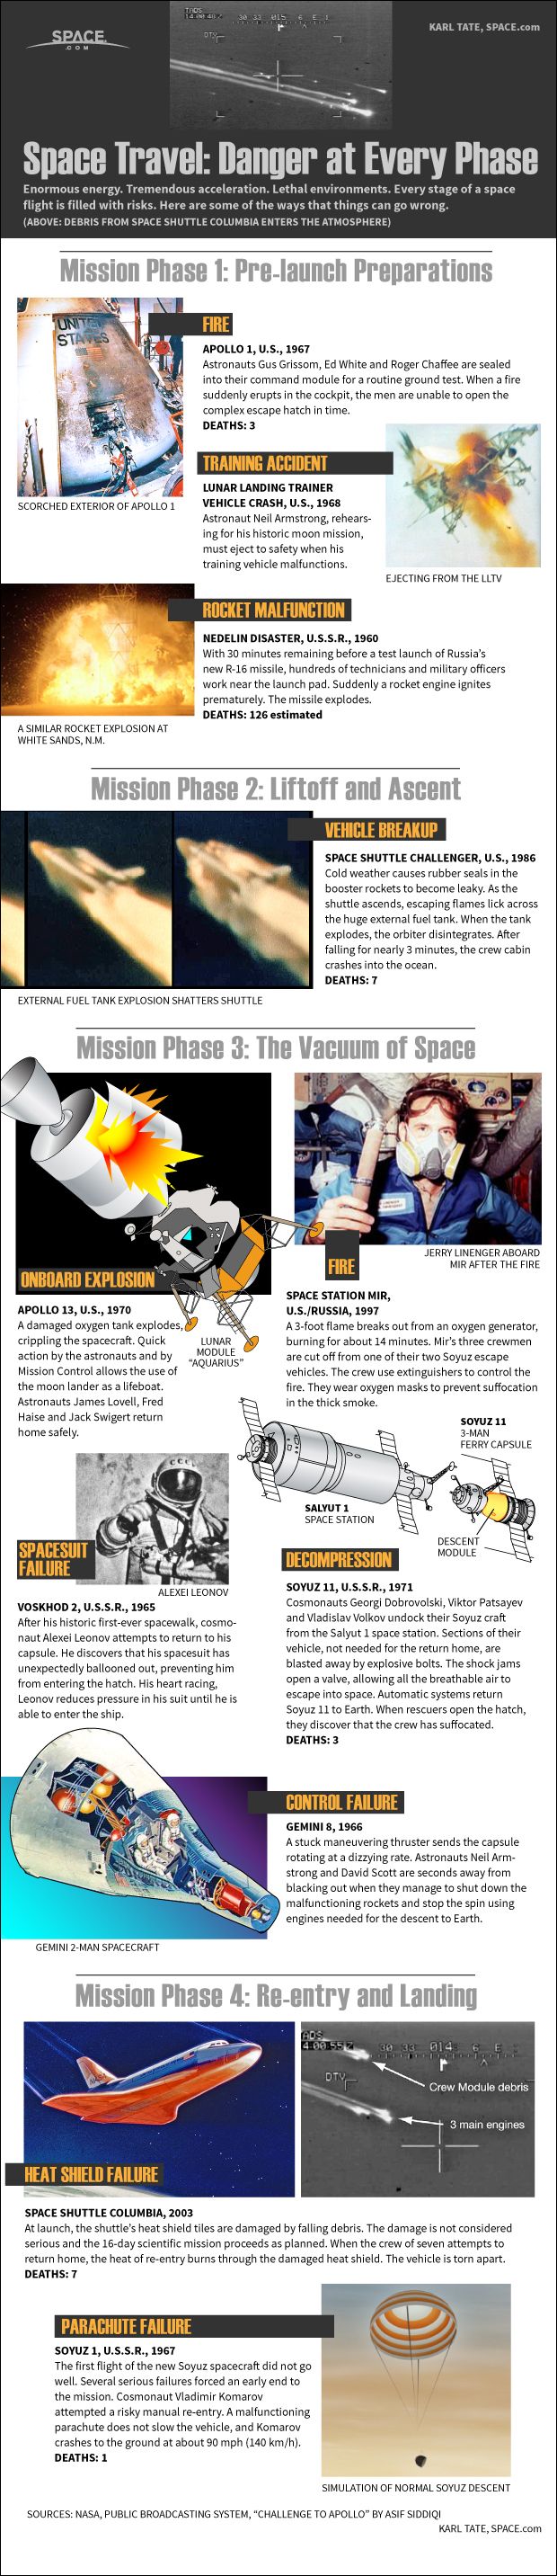 space tourism dangers